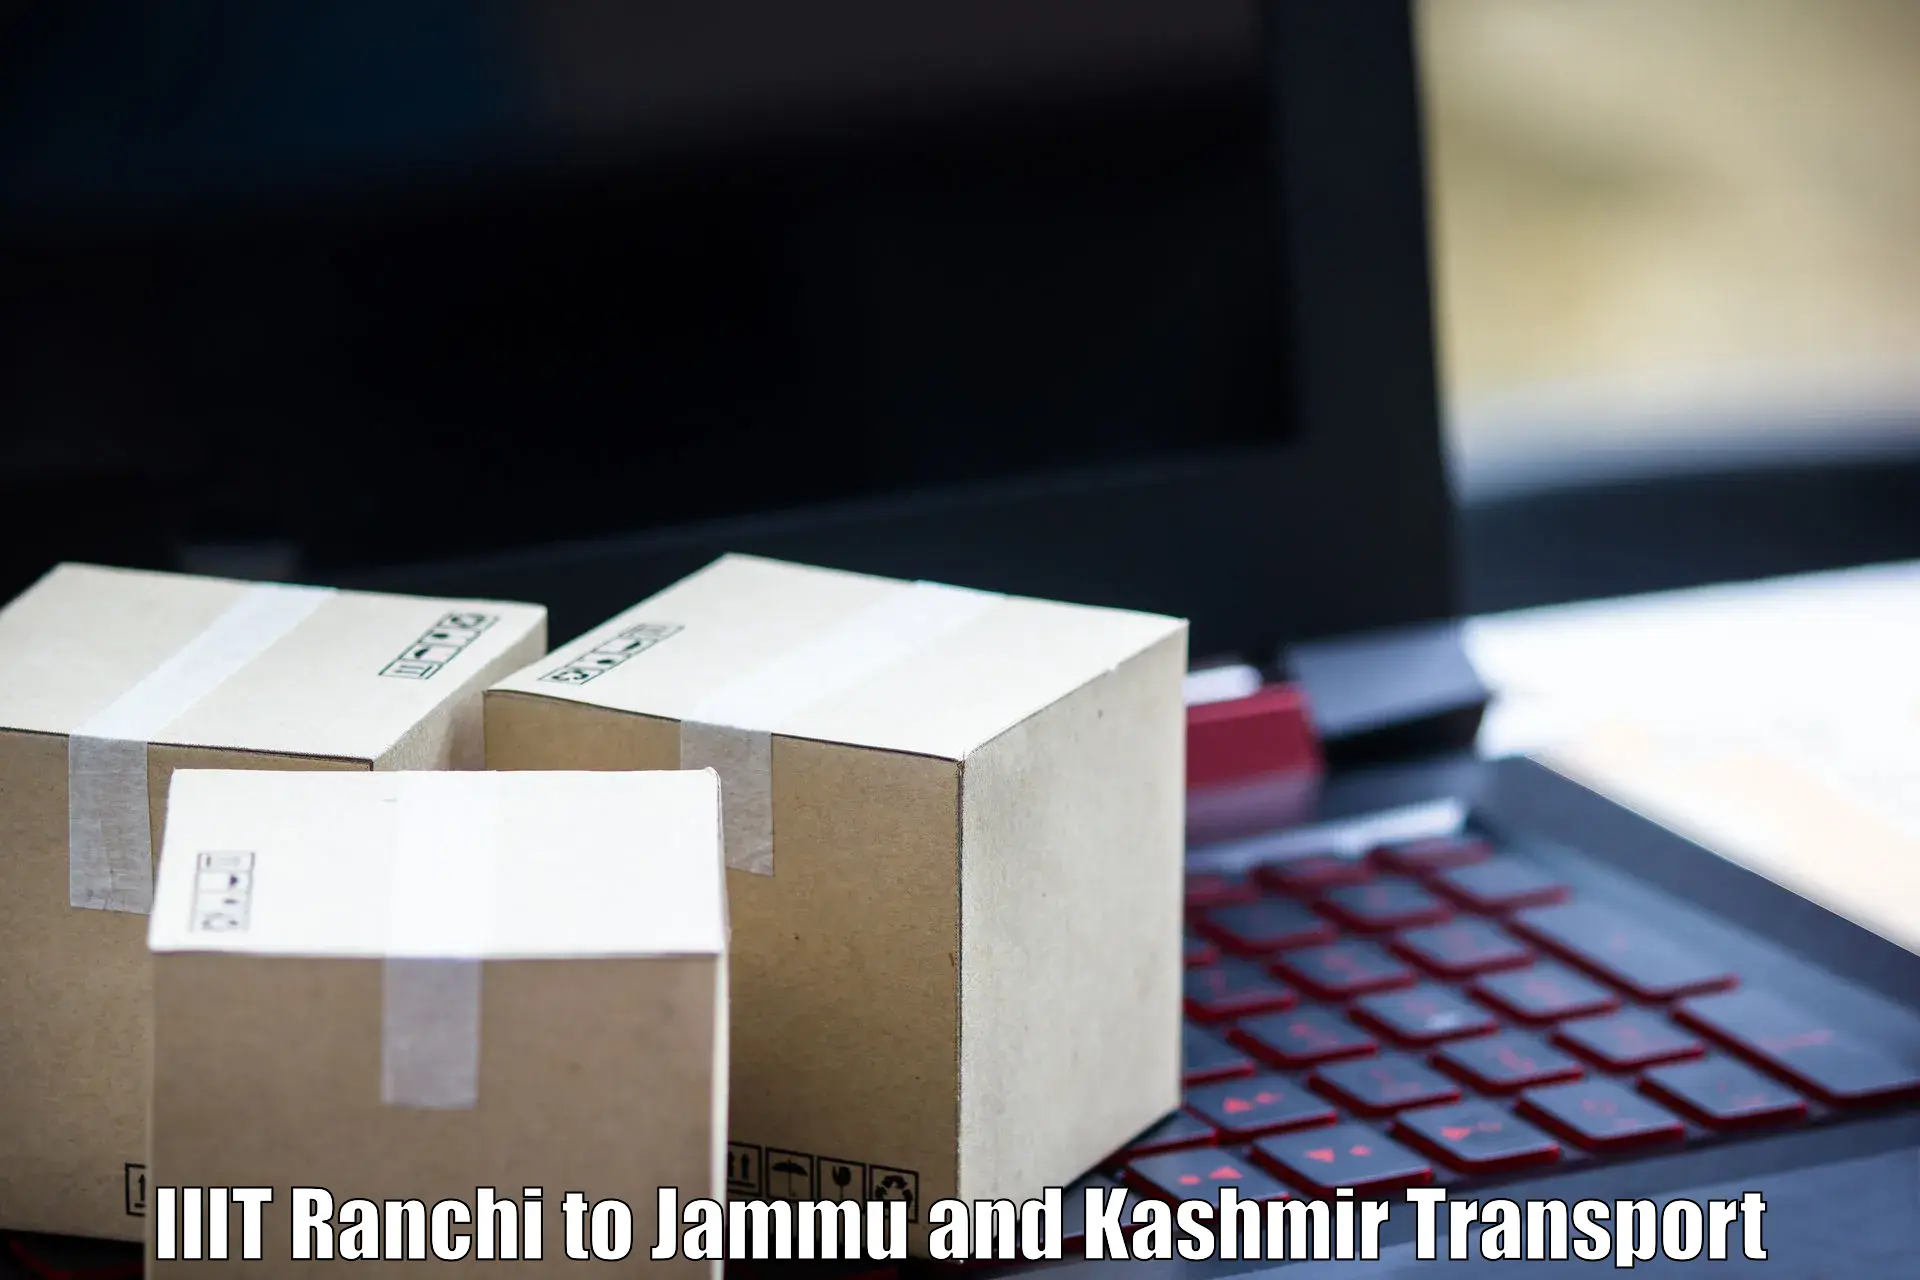 Furniture transport service IIIT Ranchi to Jammu and Kashmir